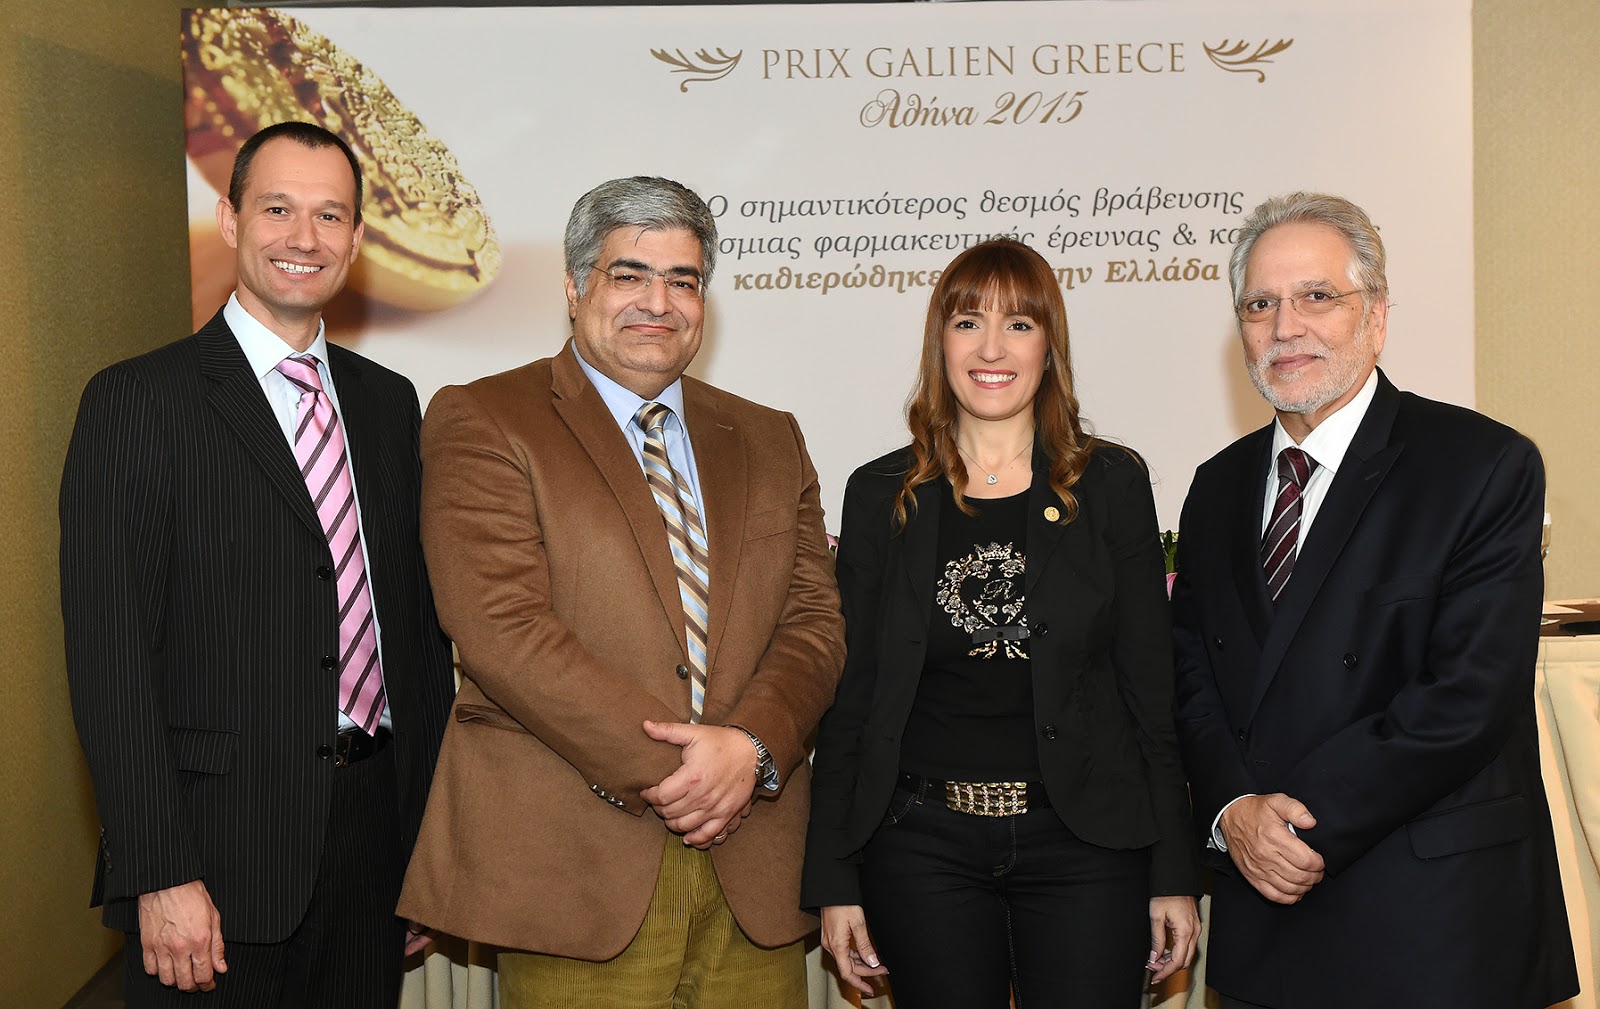 Prix Galien, o σημαντικότερος θεσμός βράβευσης της παγκόσμιας φαρμακευτικής έρευνας και καινοτομίας